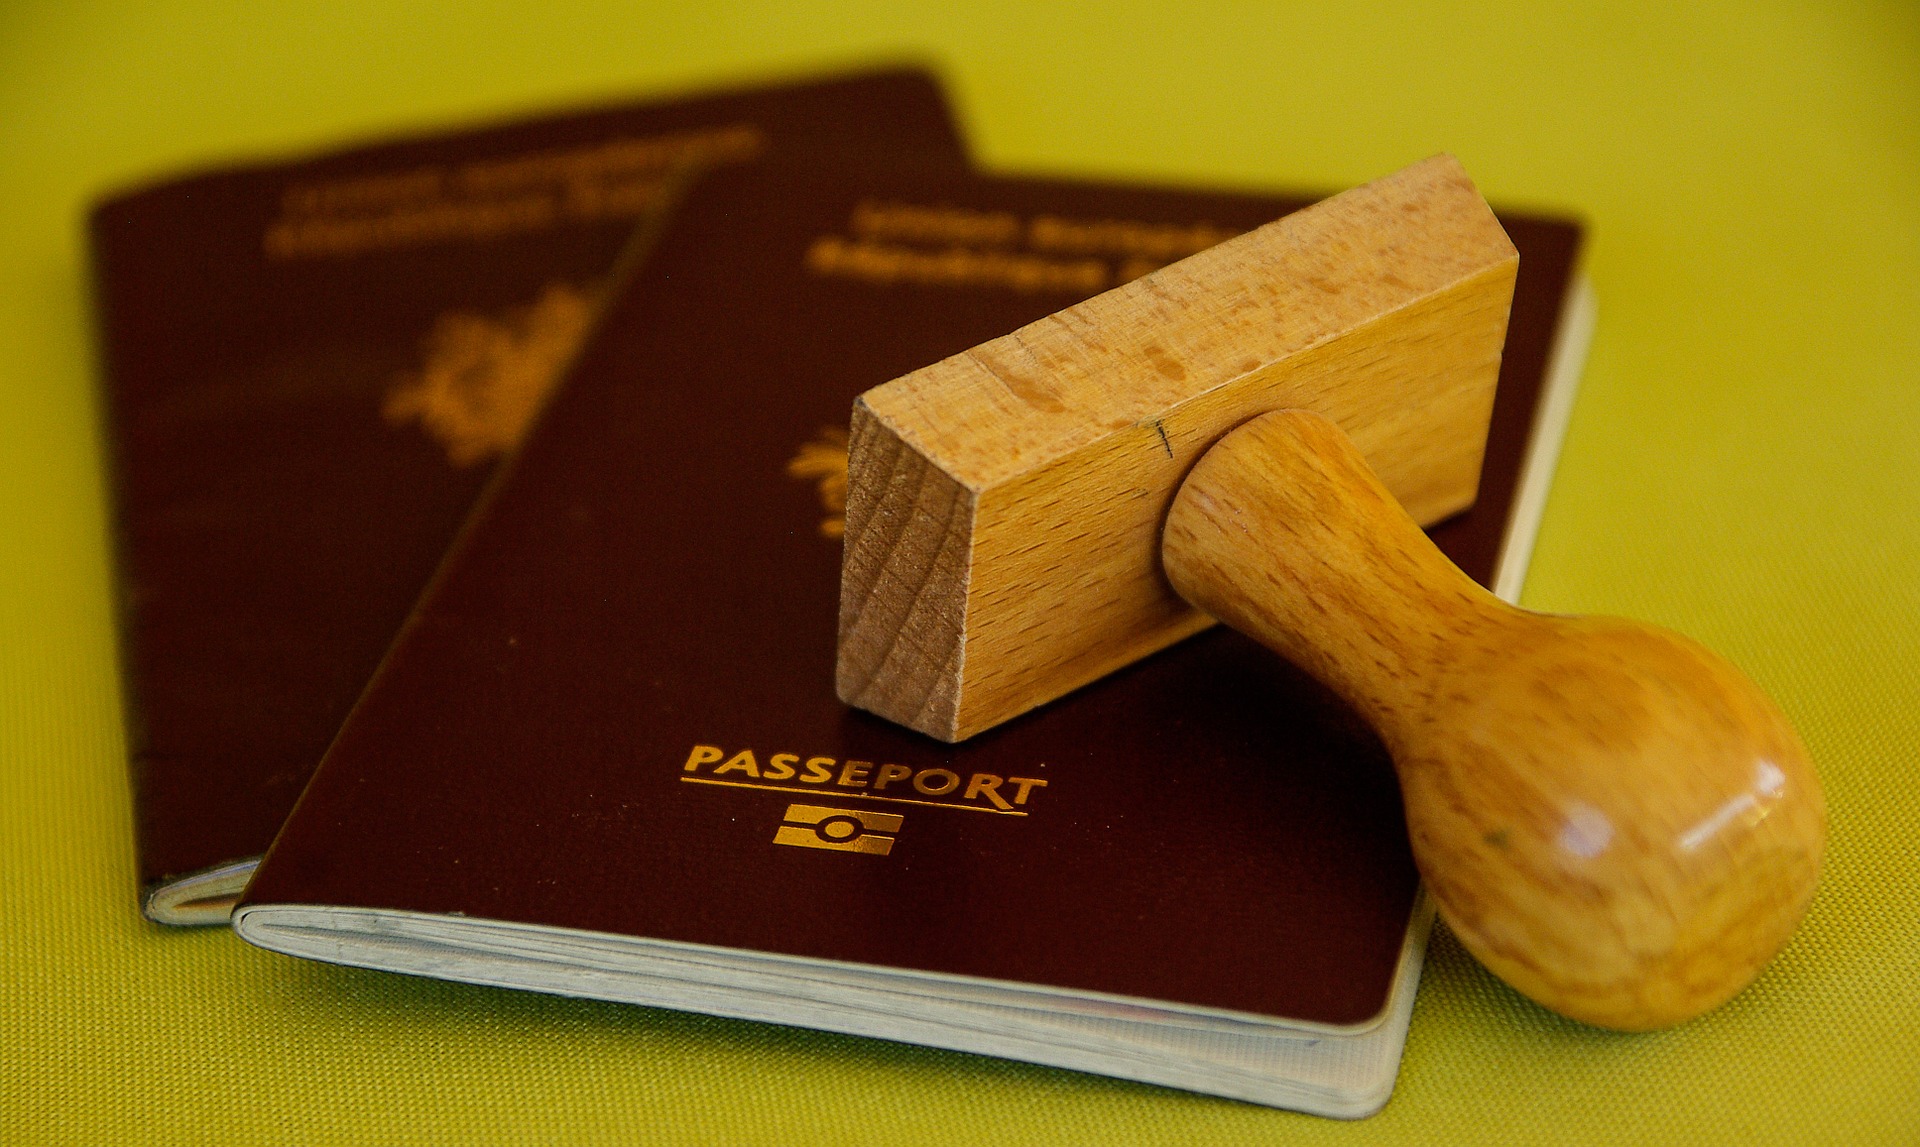 a wooden stamp on a passport